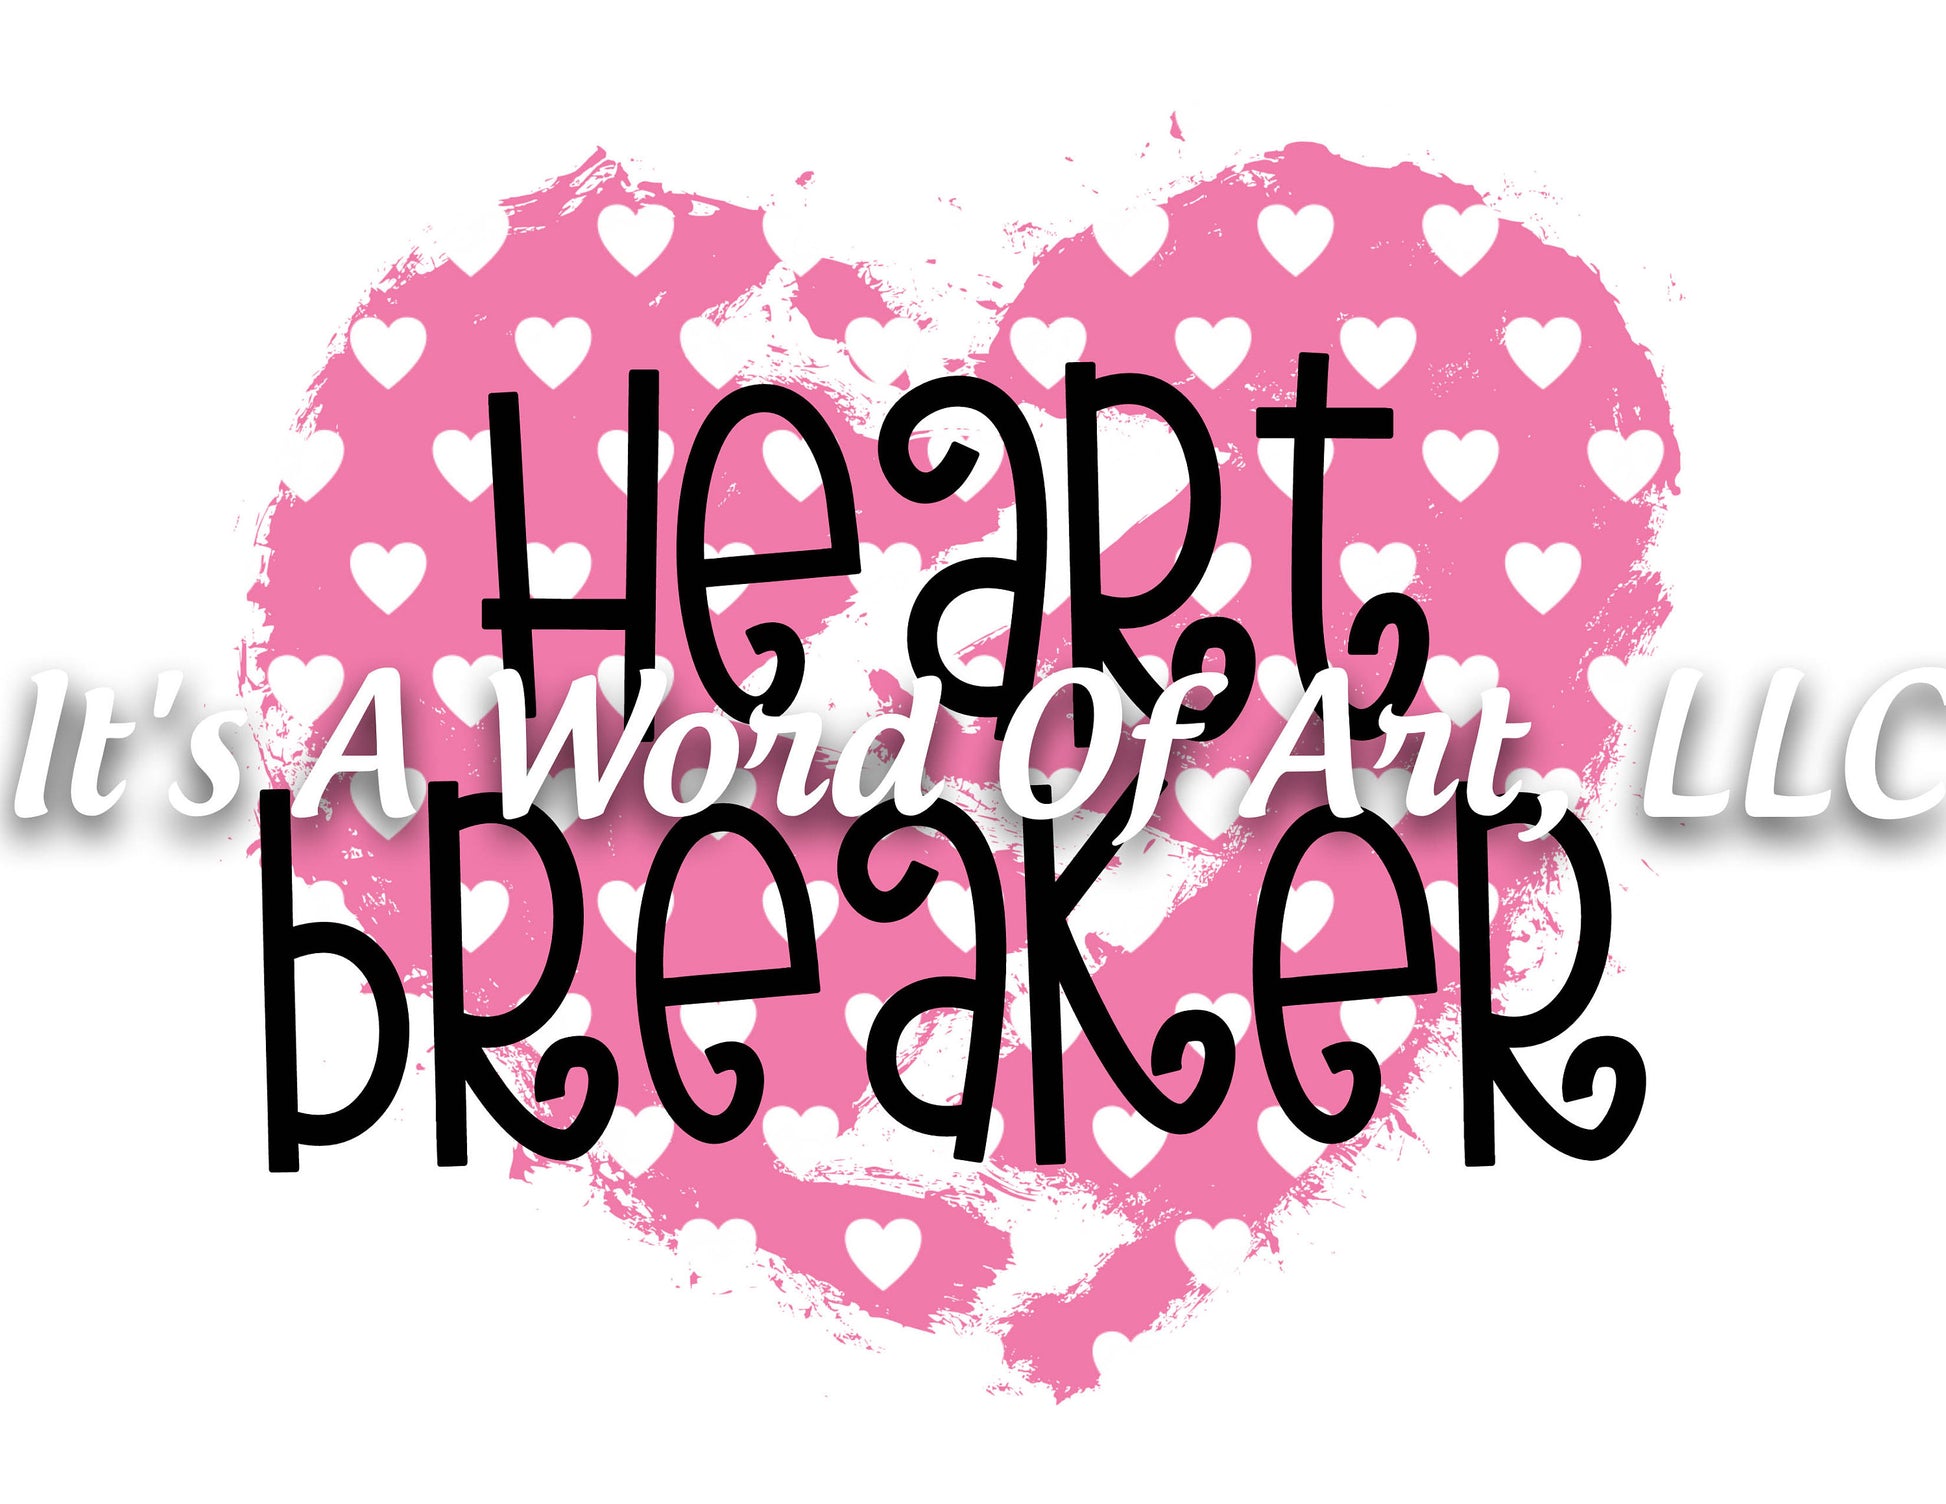 Valentines Day 15 - Heart Breaker Polka Dot - Sublimation Transfer Set/Ready To Press Sublimation Transfer/Sublimation Transfer